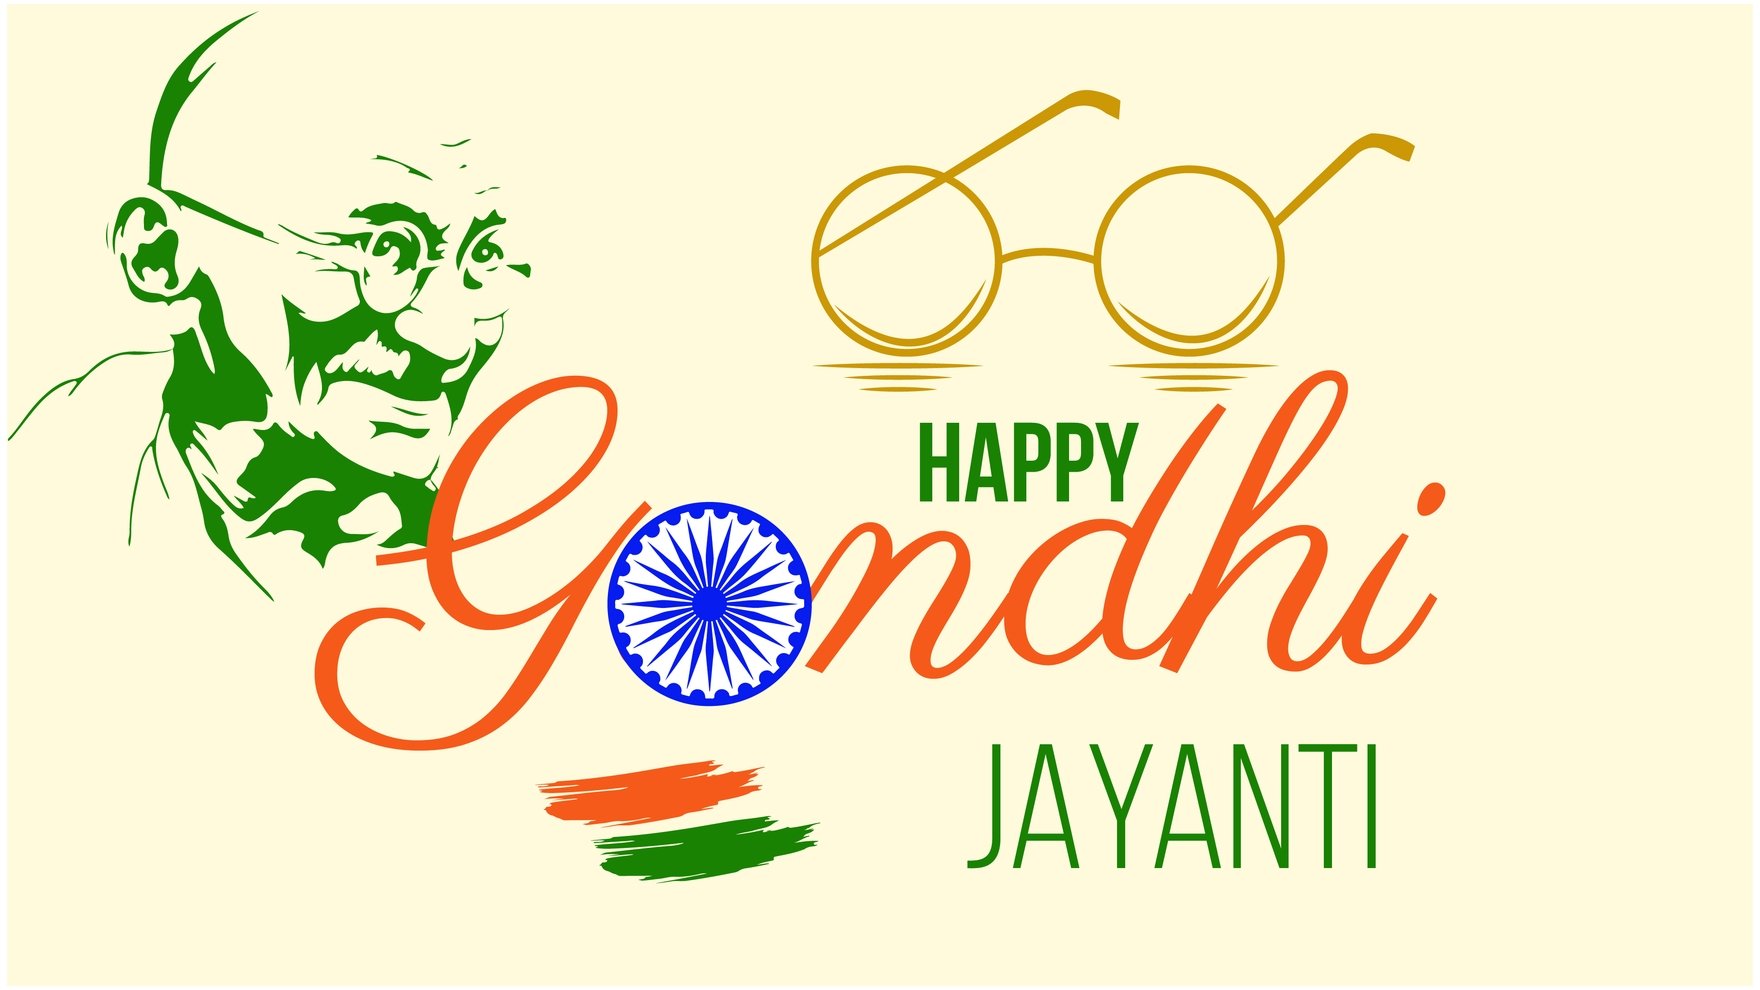 Free Happy Gandhi Jayanti Background in PDF, Illustrator, PSD, EPS, SVG, JPG, PNG